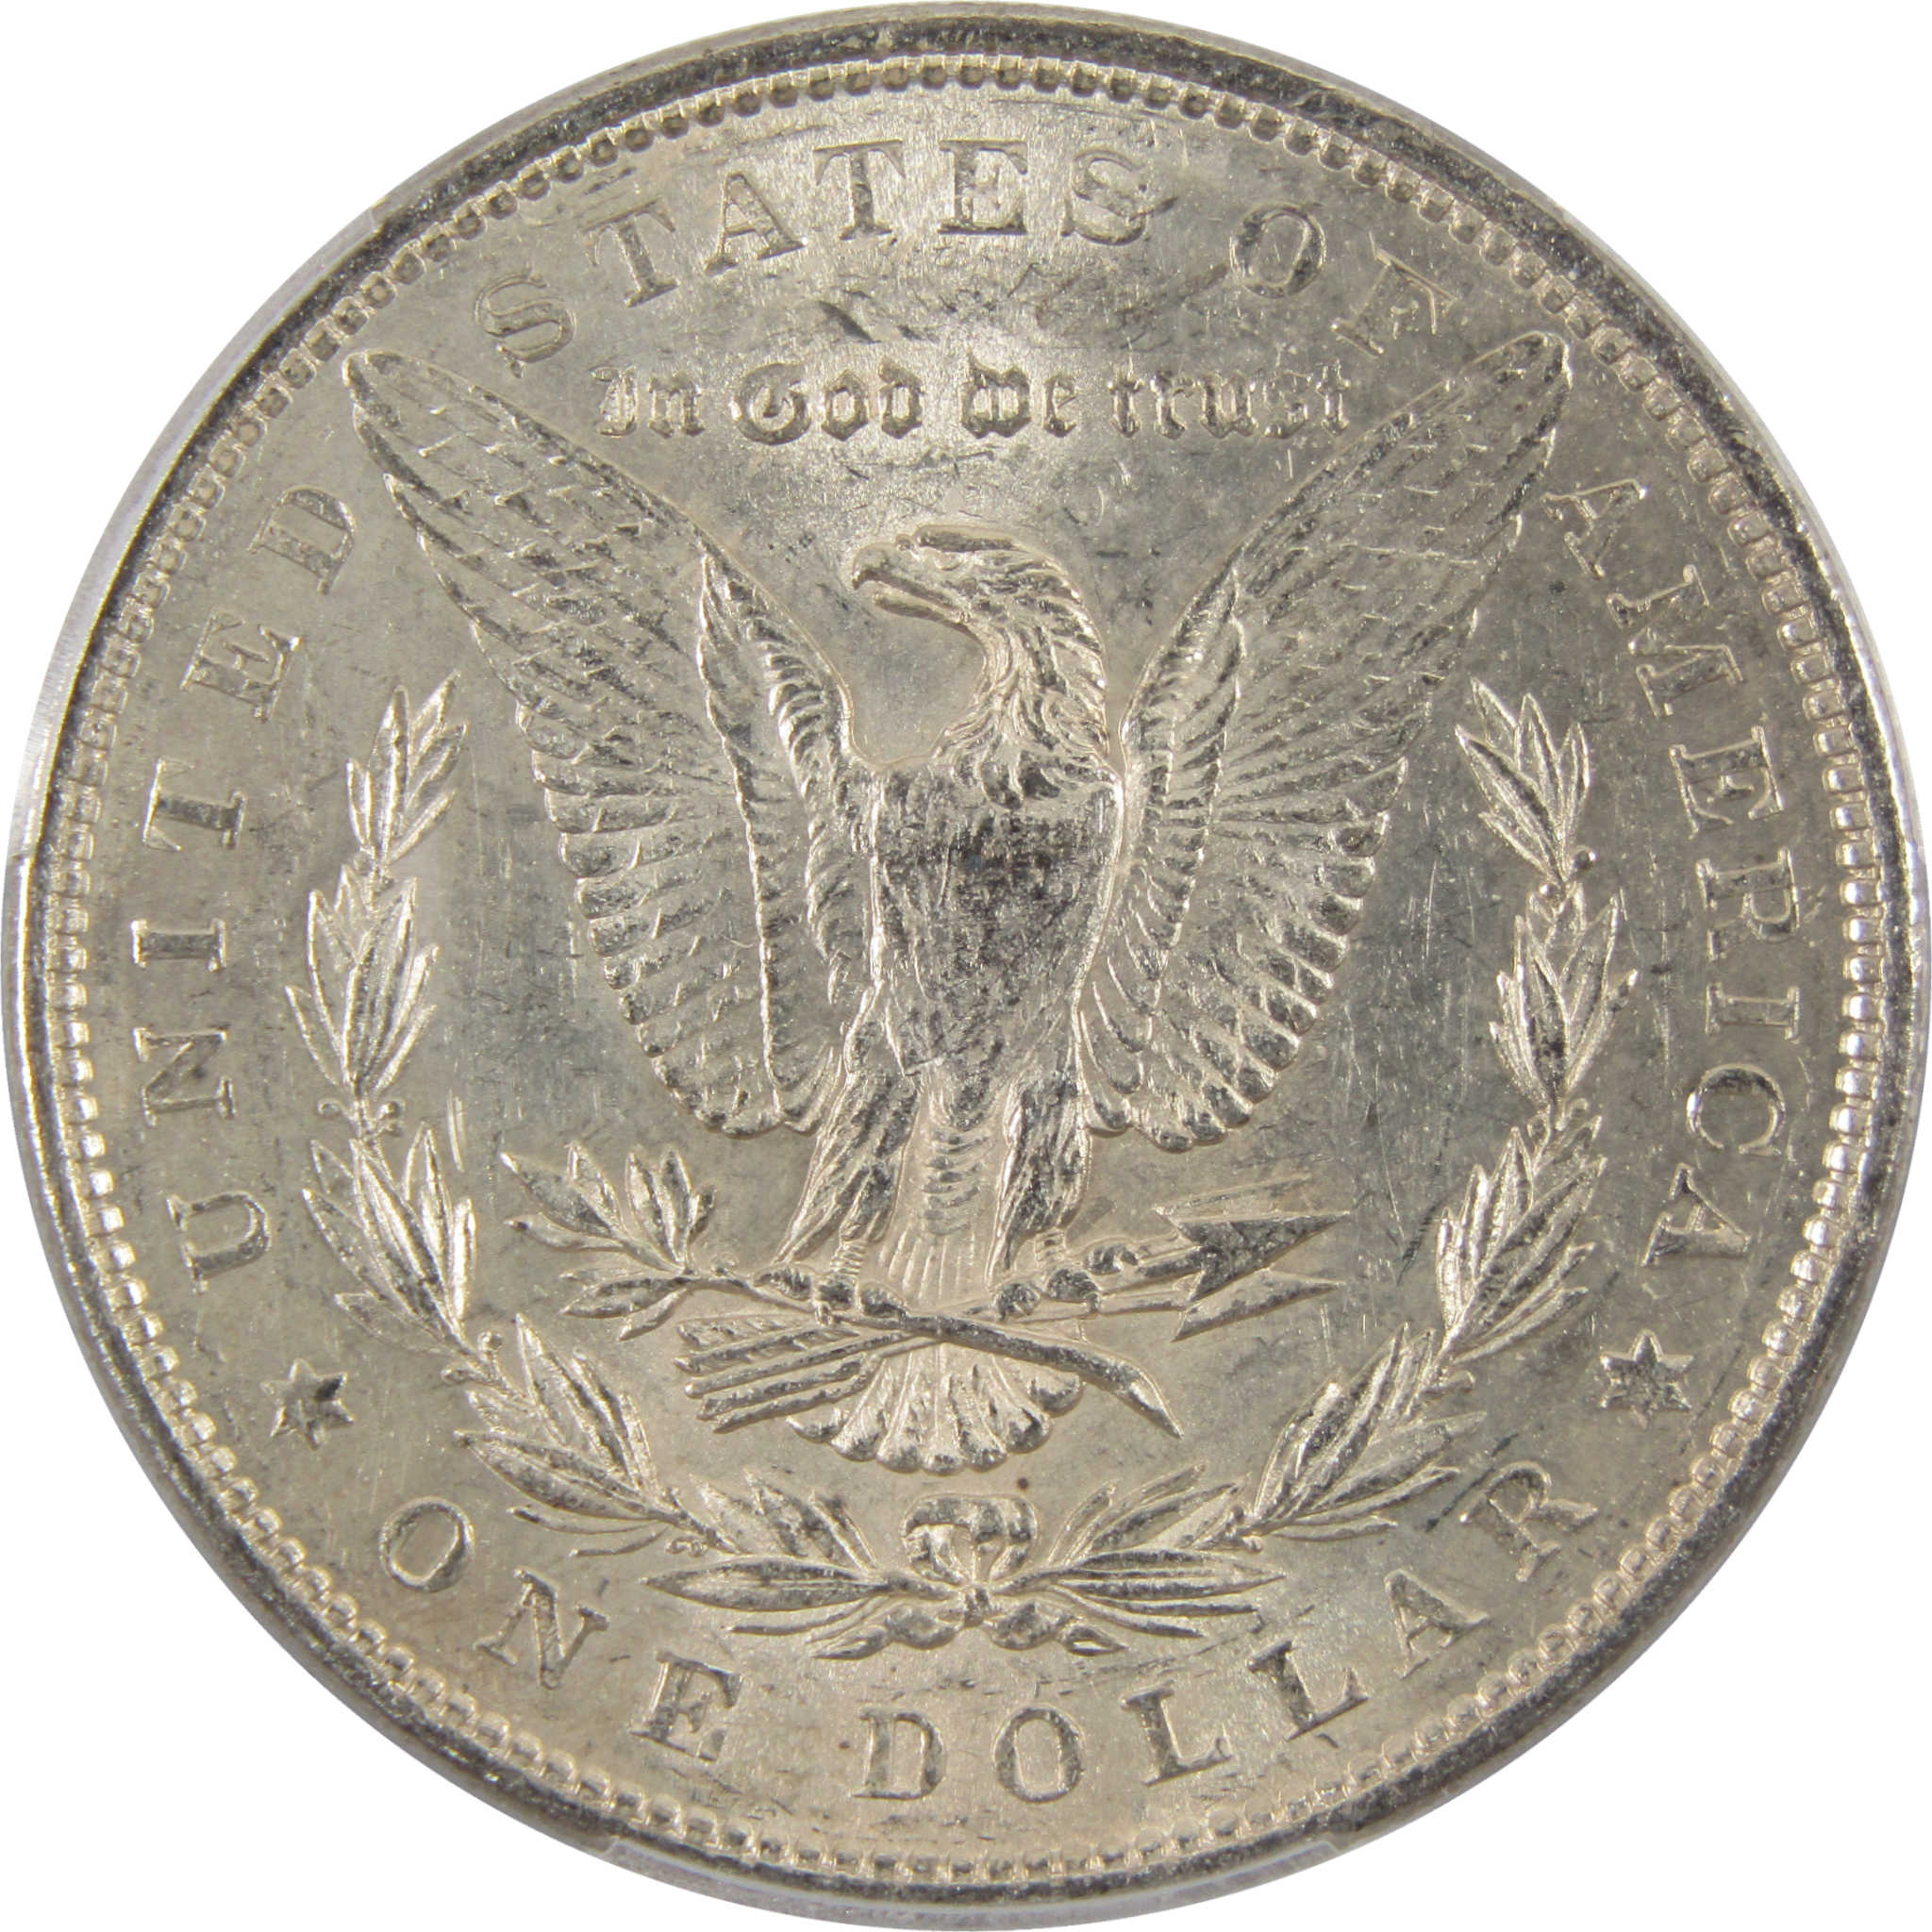 1878 7TF Rev 79 Morgan Dollar AU 53 PCGS 90% Silver $1 Coin SKU:I7632 - Morgan coin - Morgan silver dollar - Morgan silver dollar for sale - Profile Coins &amp; Collectibles